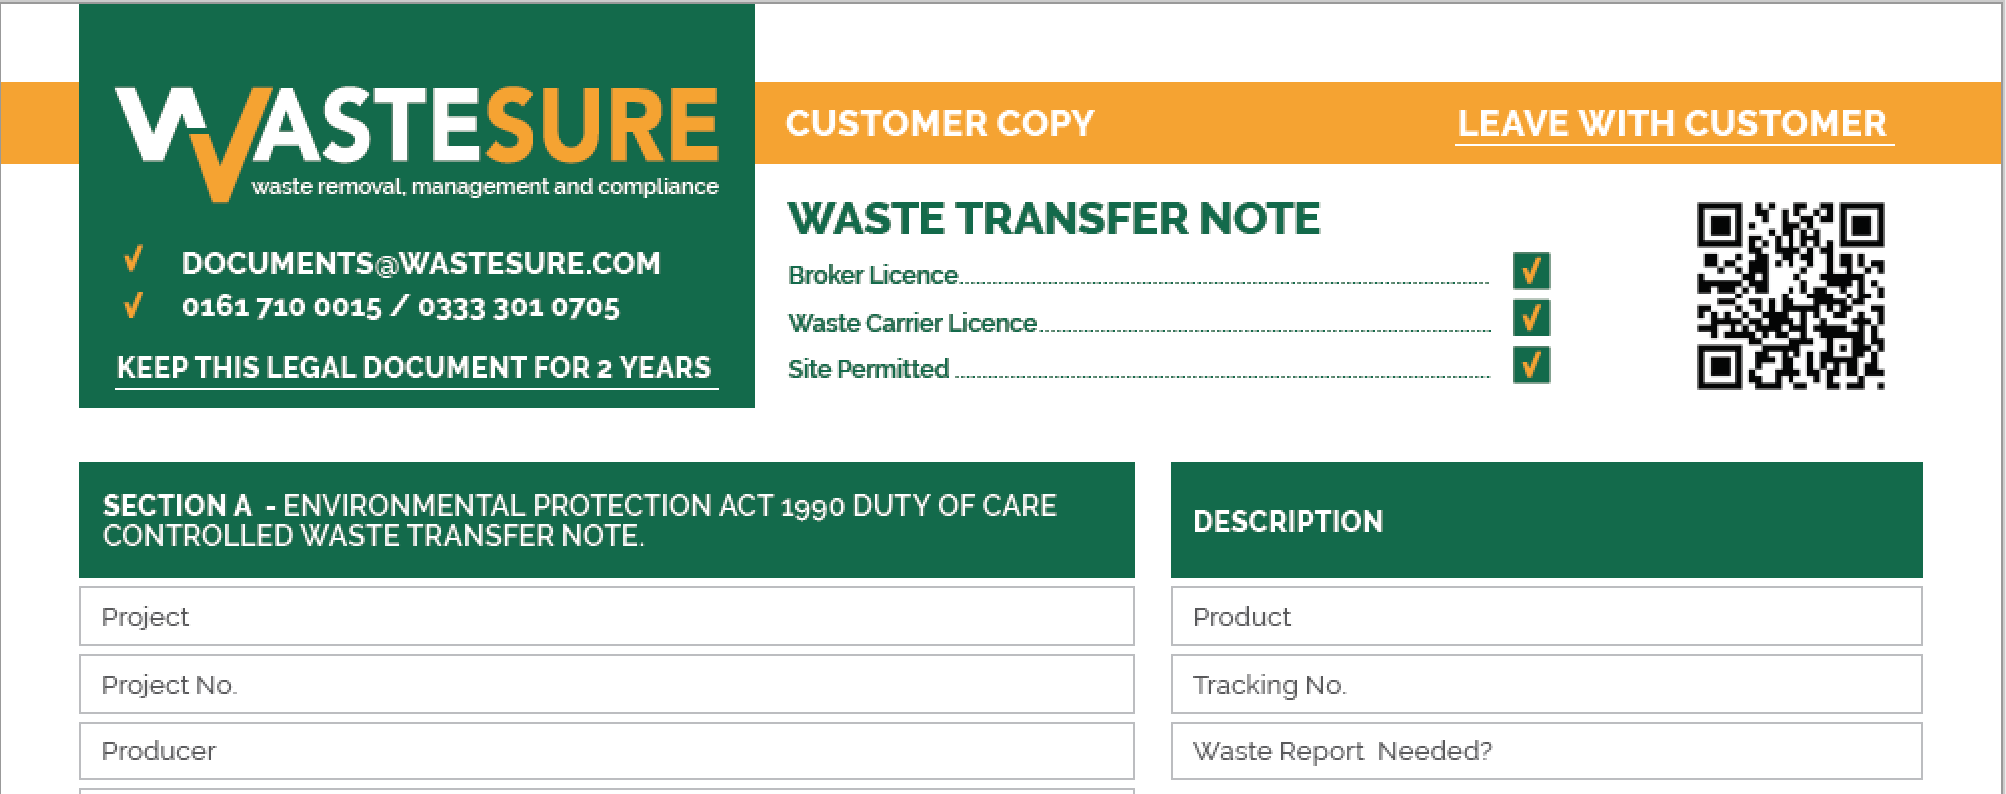 Introducing WasteSURE’s Digital Waste Transfer Note